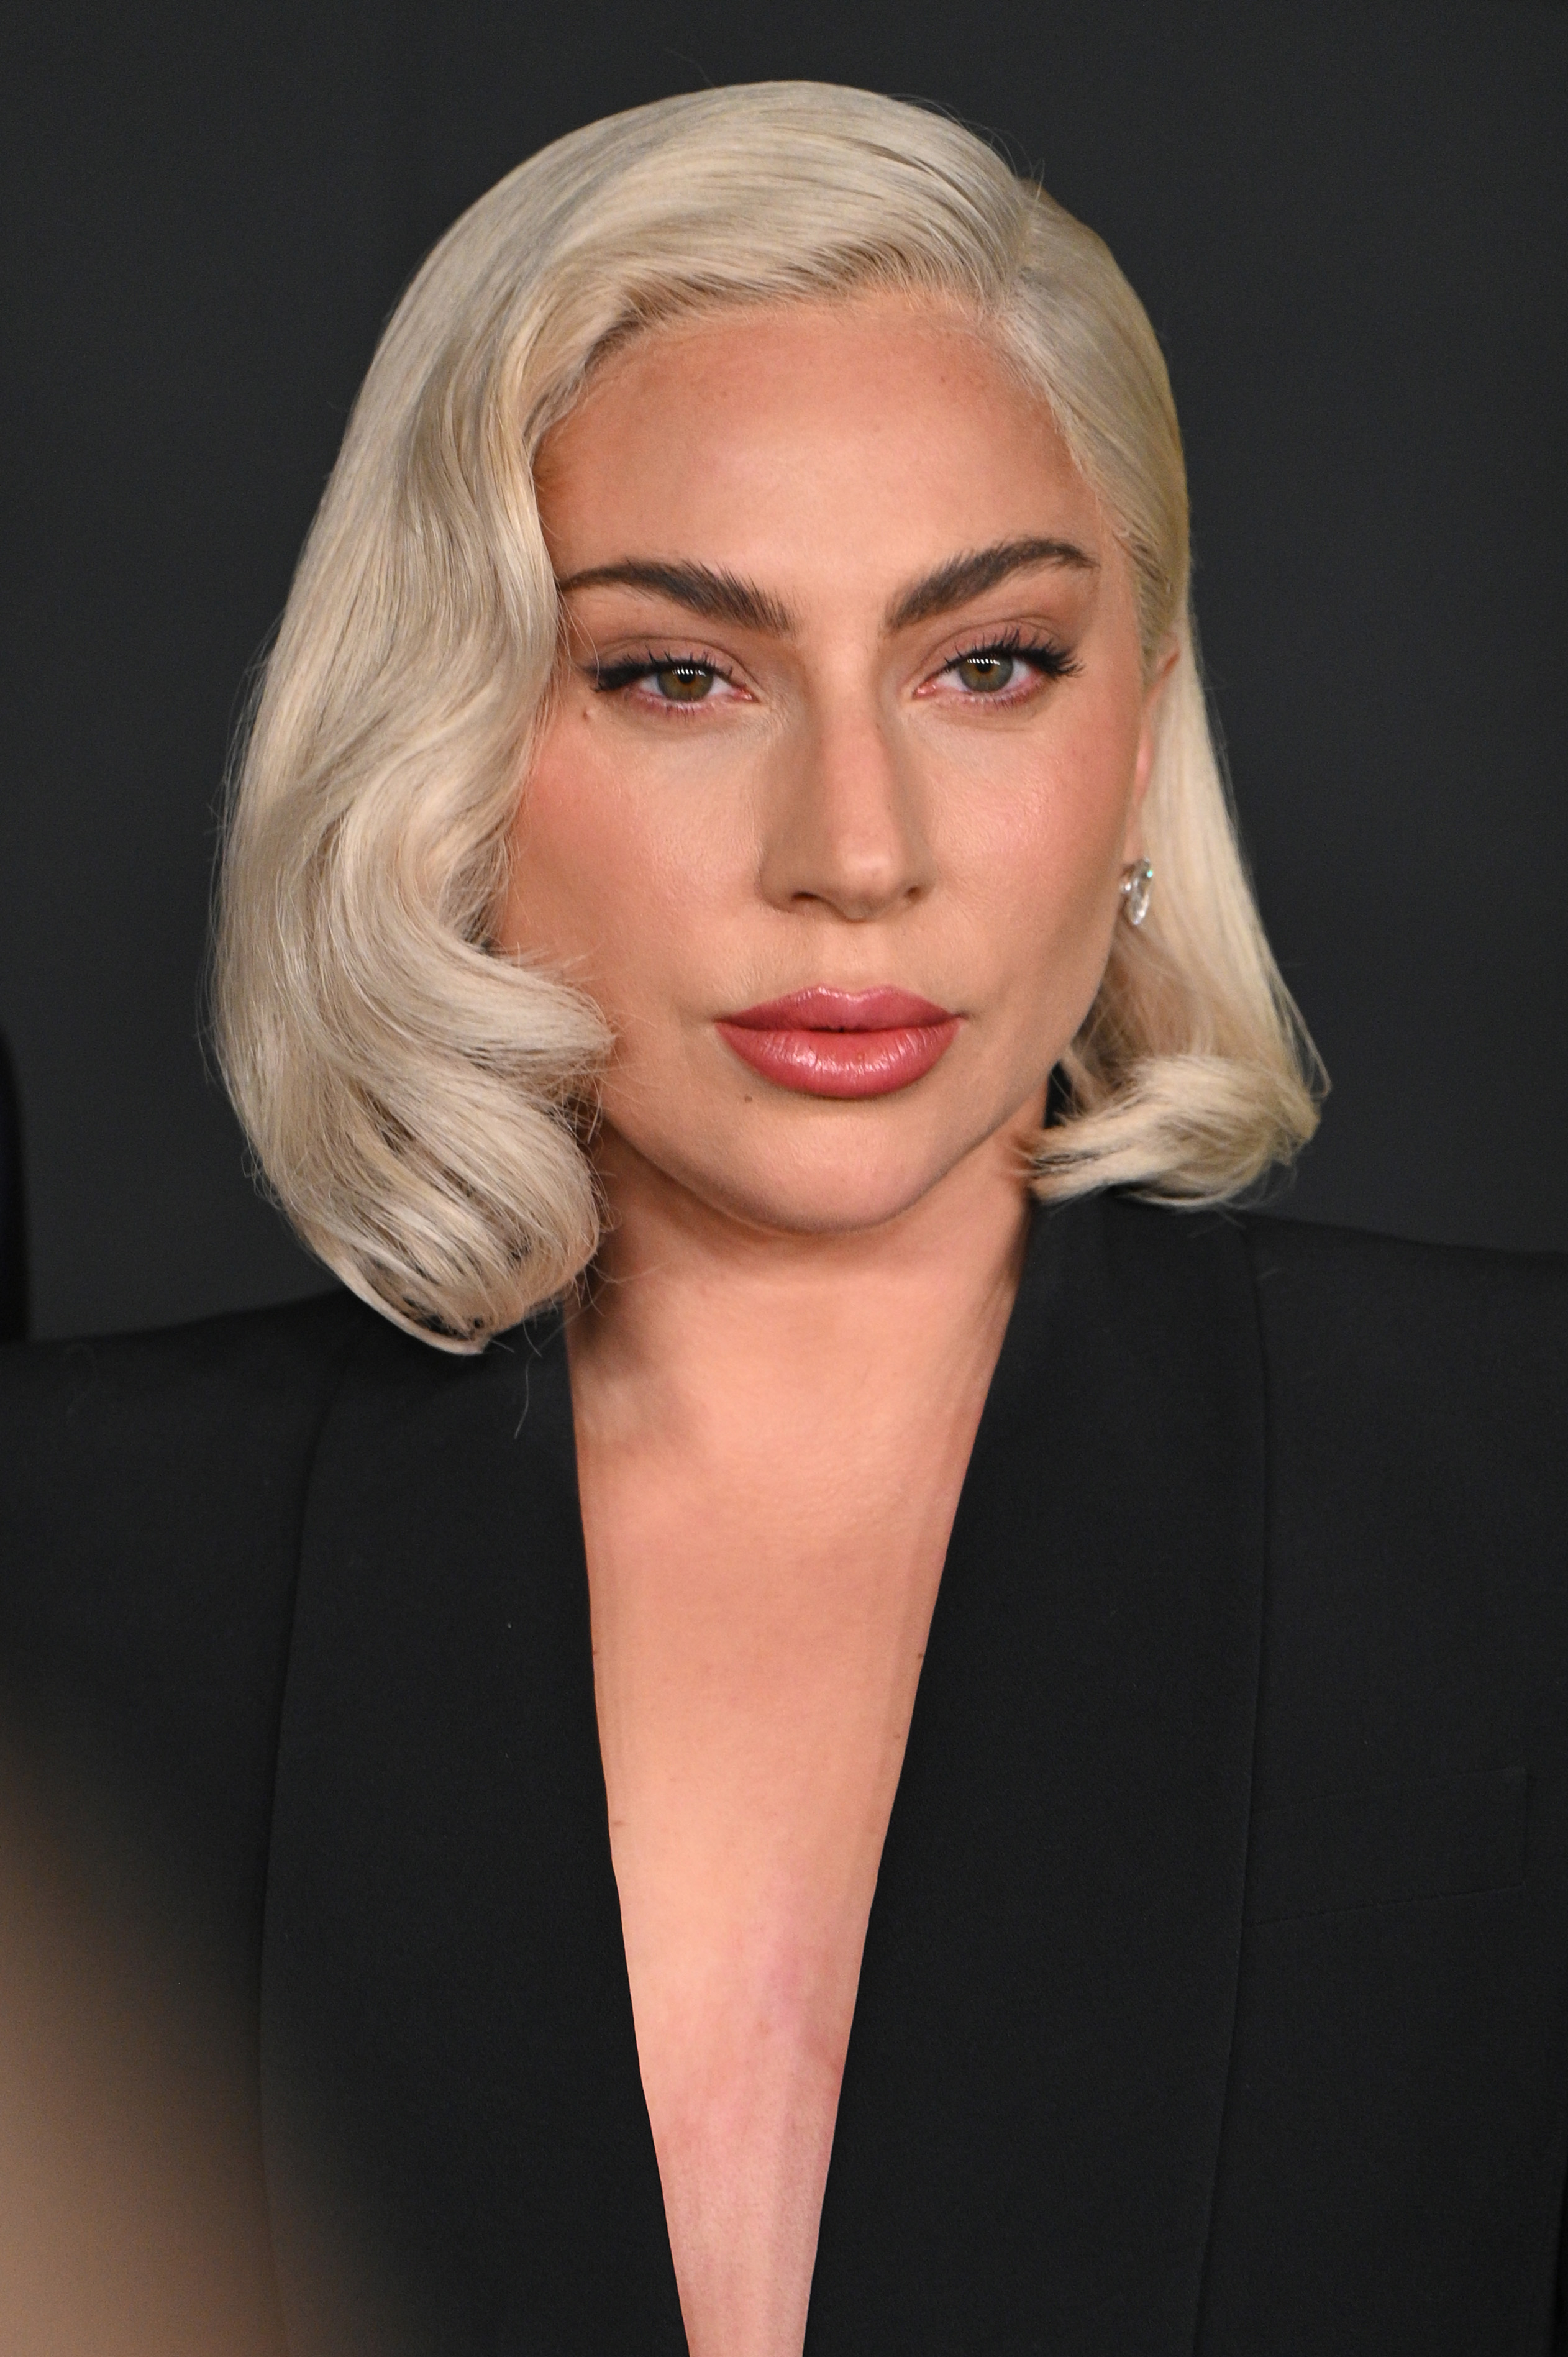 Close-up of Gaga/Stefani